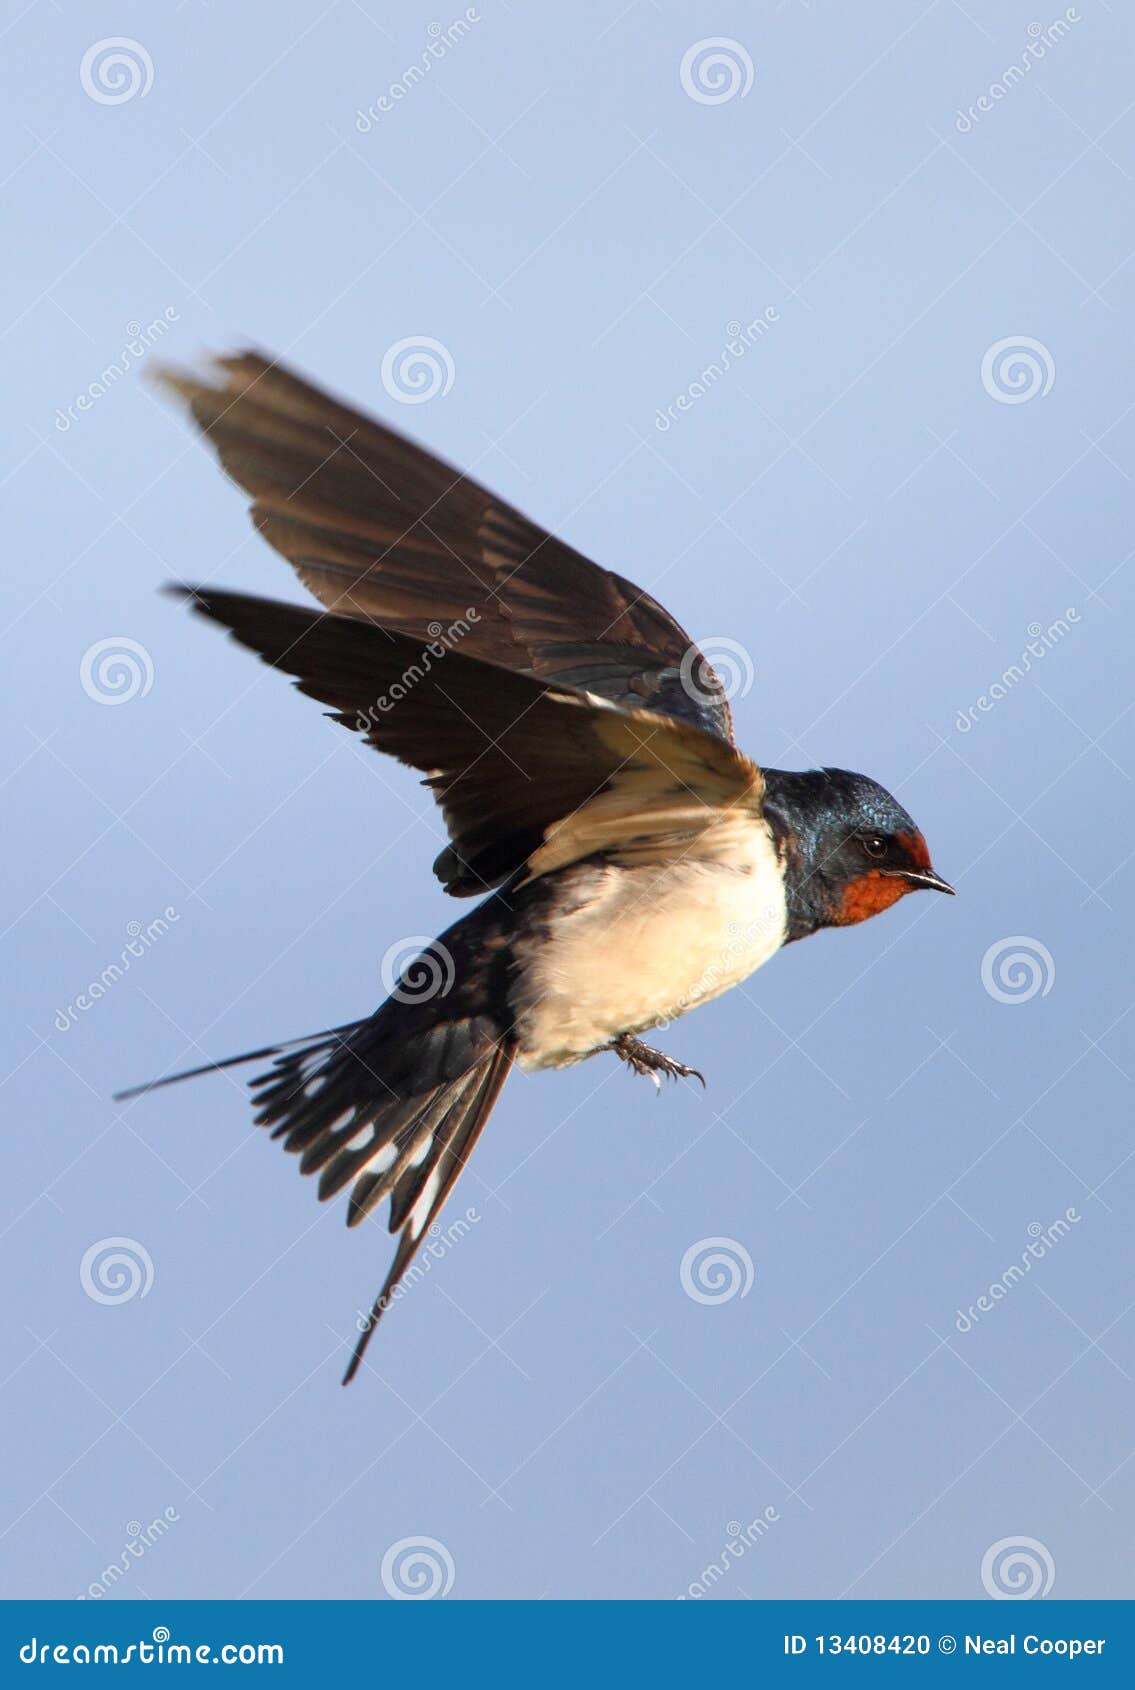 flying-barn-swallow-13408420.jpg